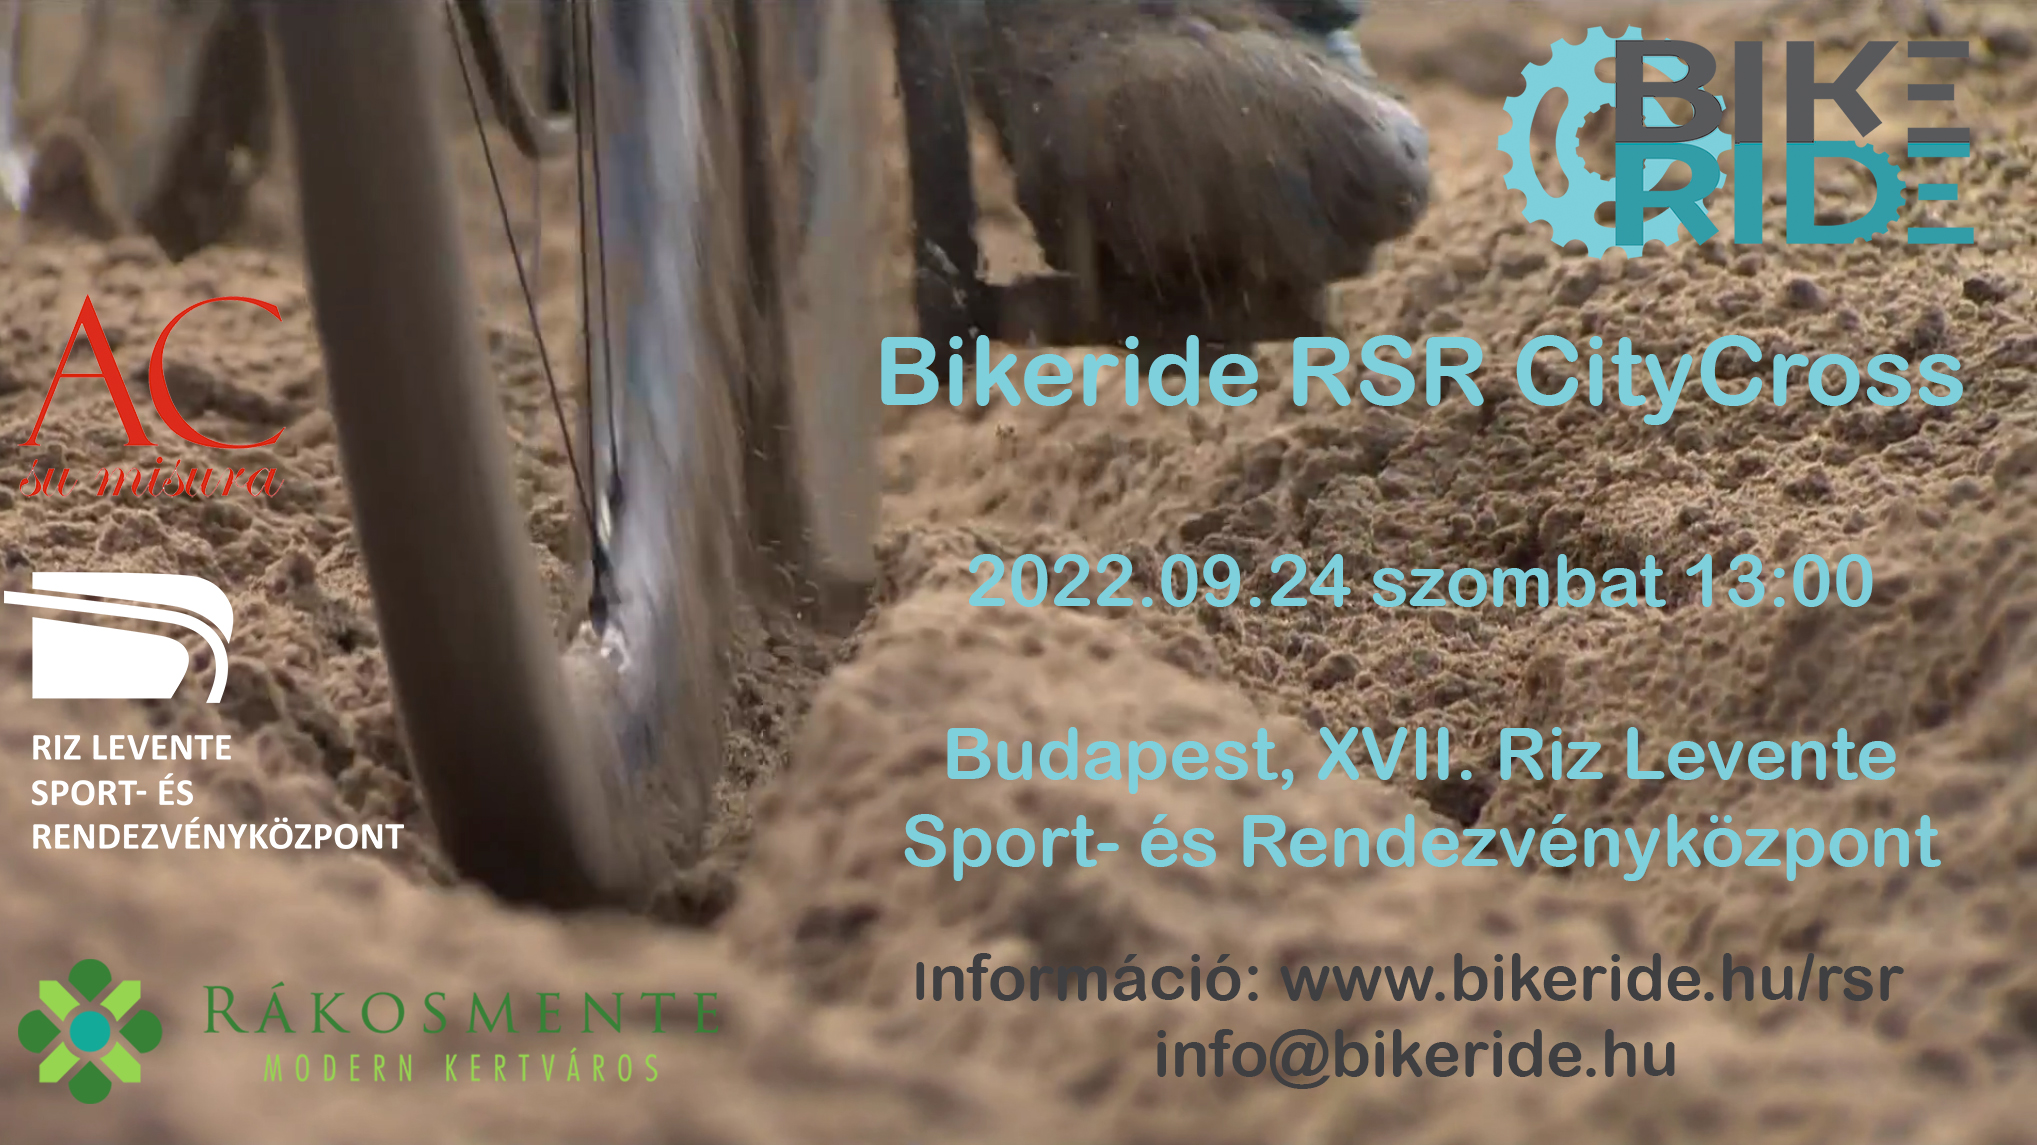 Bikeride RSR CityCross